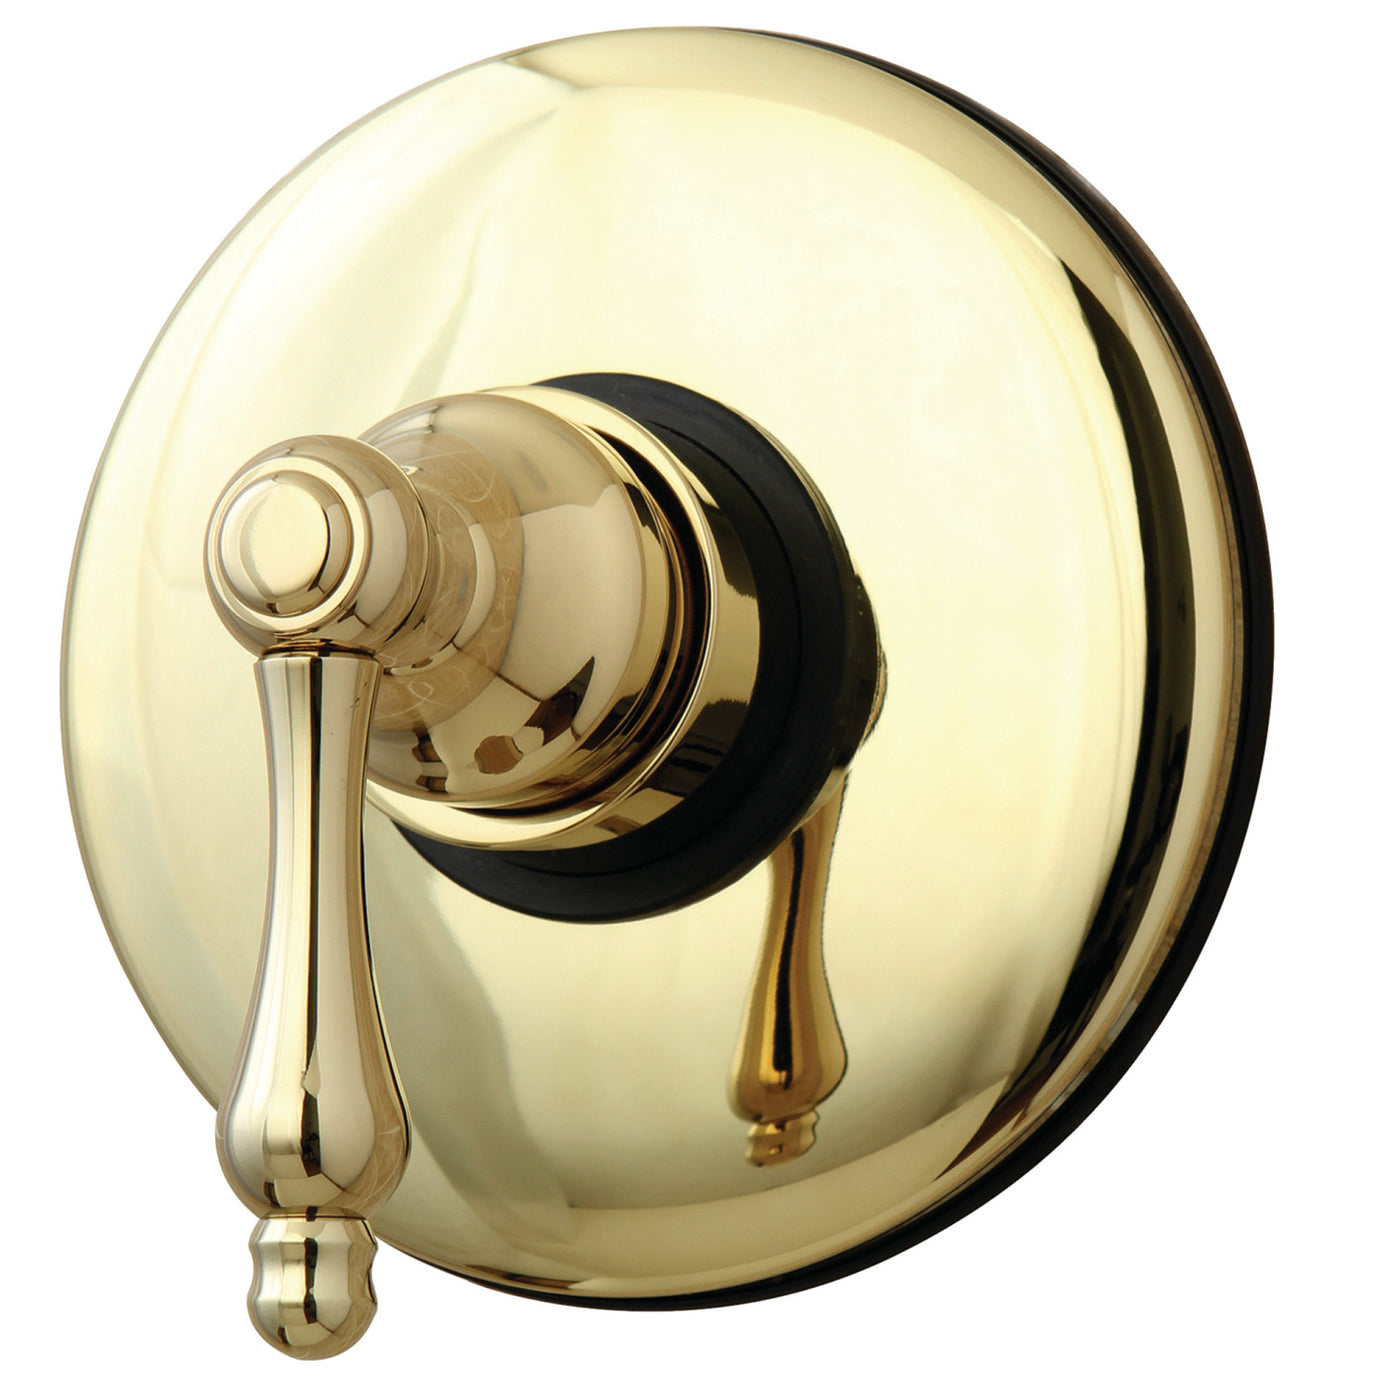 Elements of Design EB3002AL Volume Control, Polished Brass